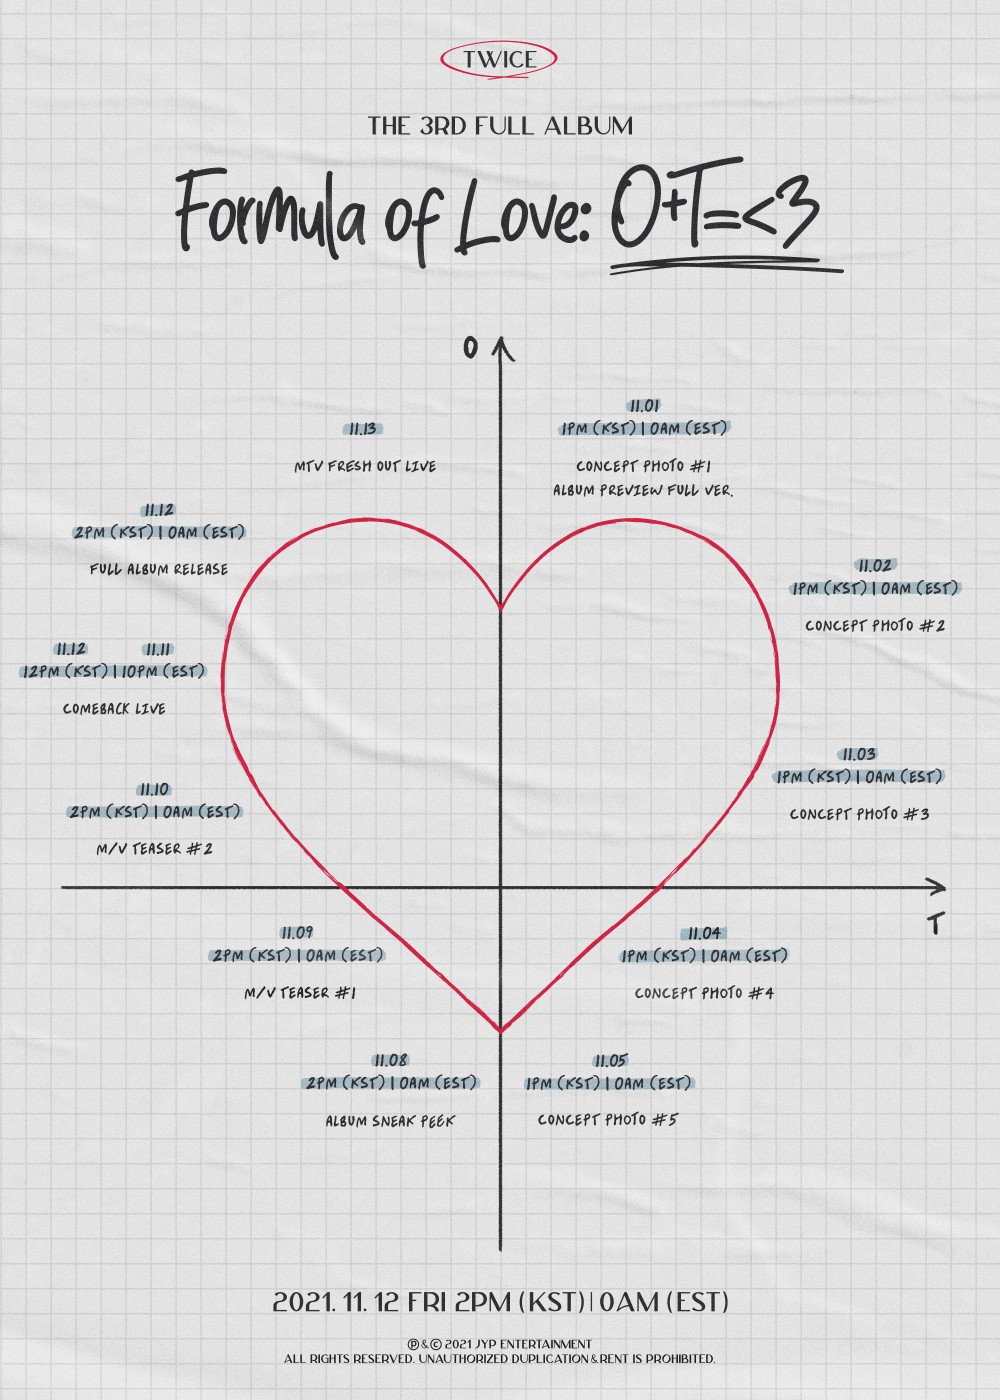 [Камбэк] TWICE альбом «Formula of Love: музыкальный клип "Scientist"